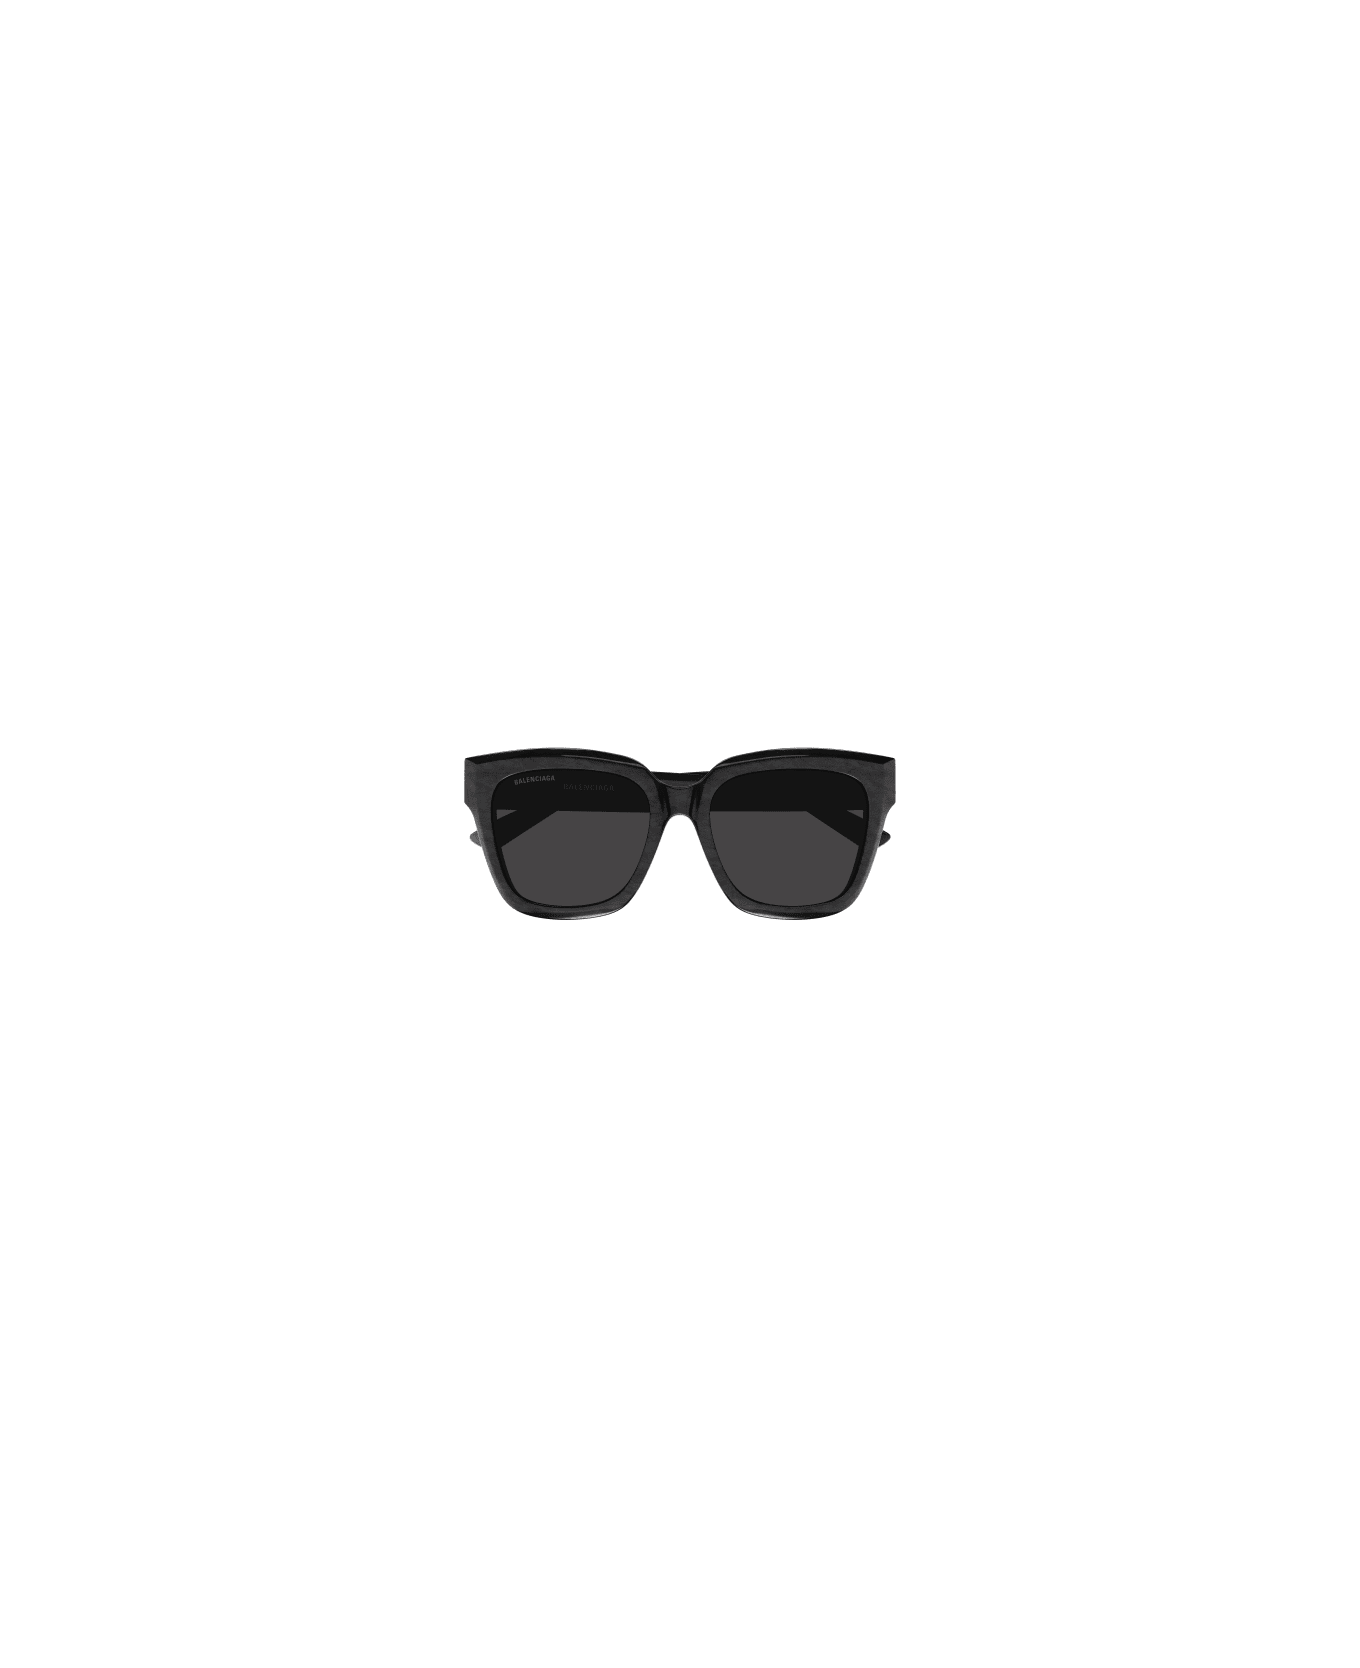 Balenciaga Eyewear 1e654id0a - cutler gross aviator sunglasses item